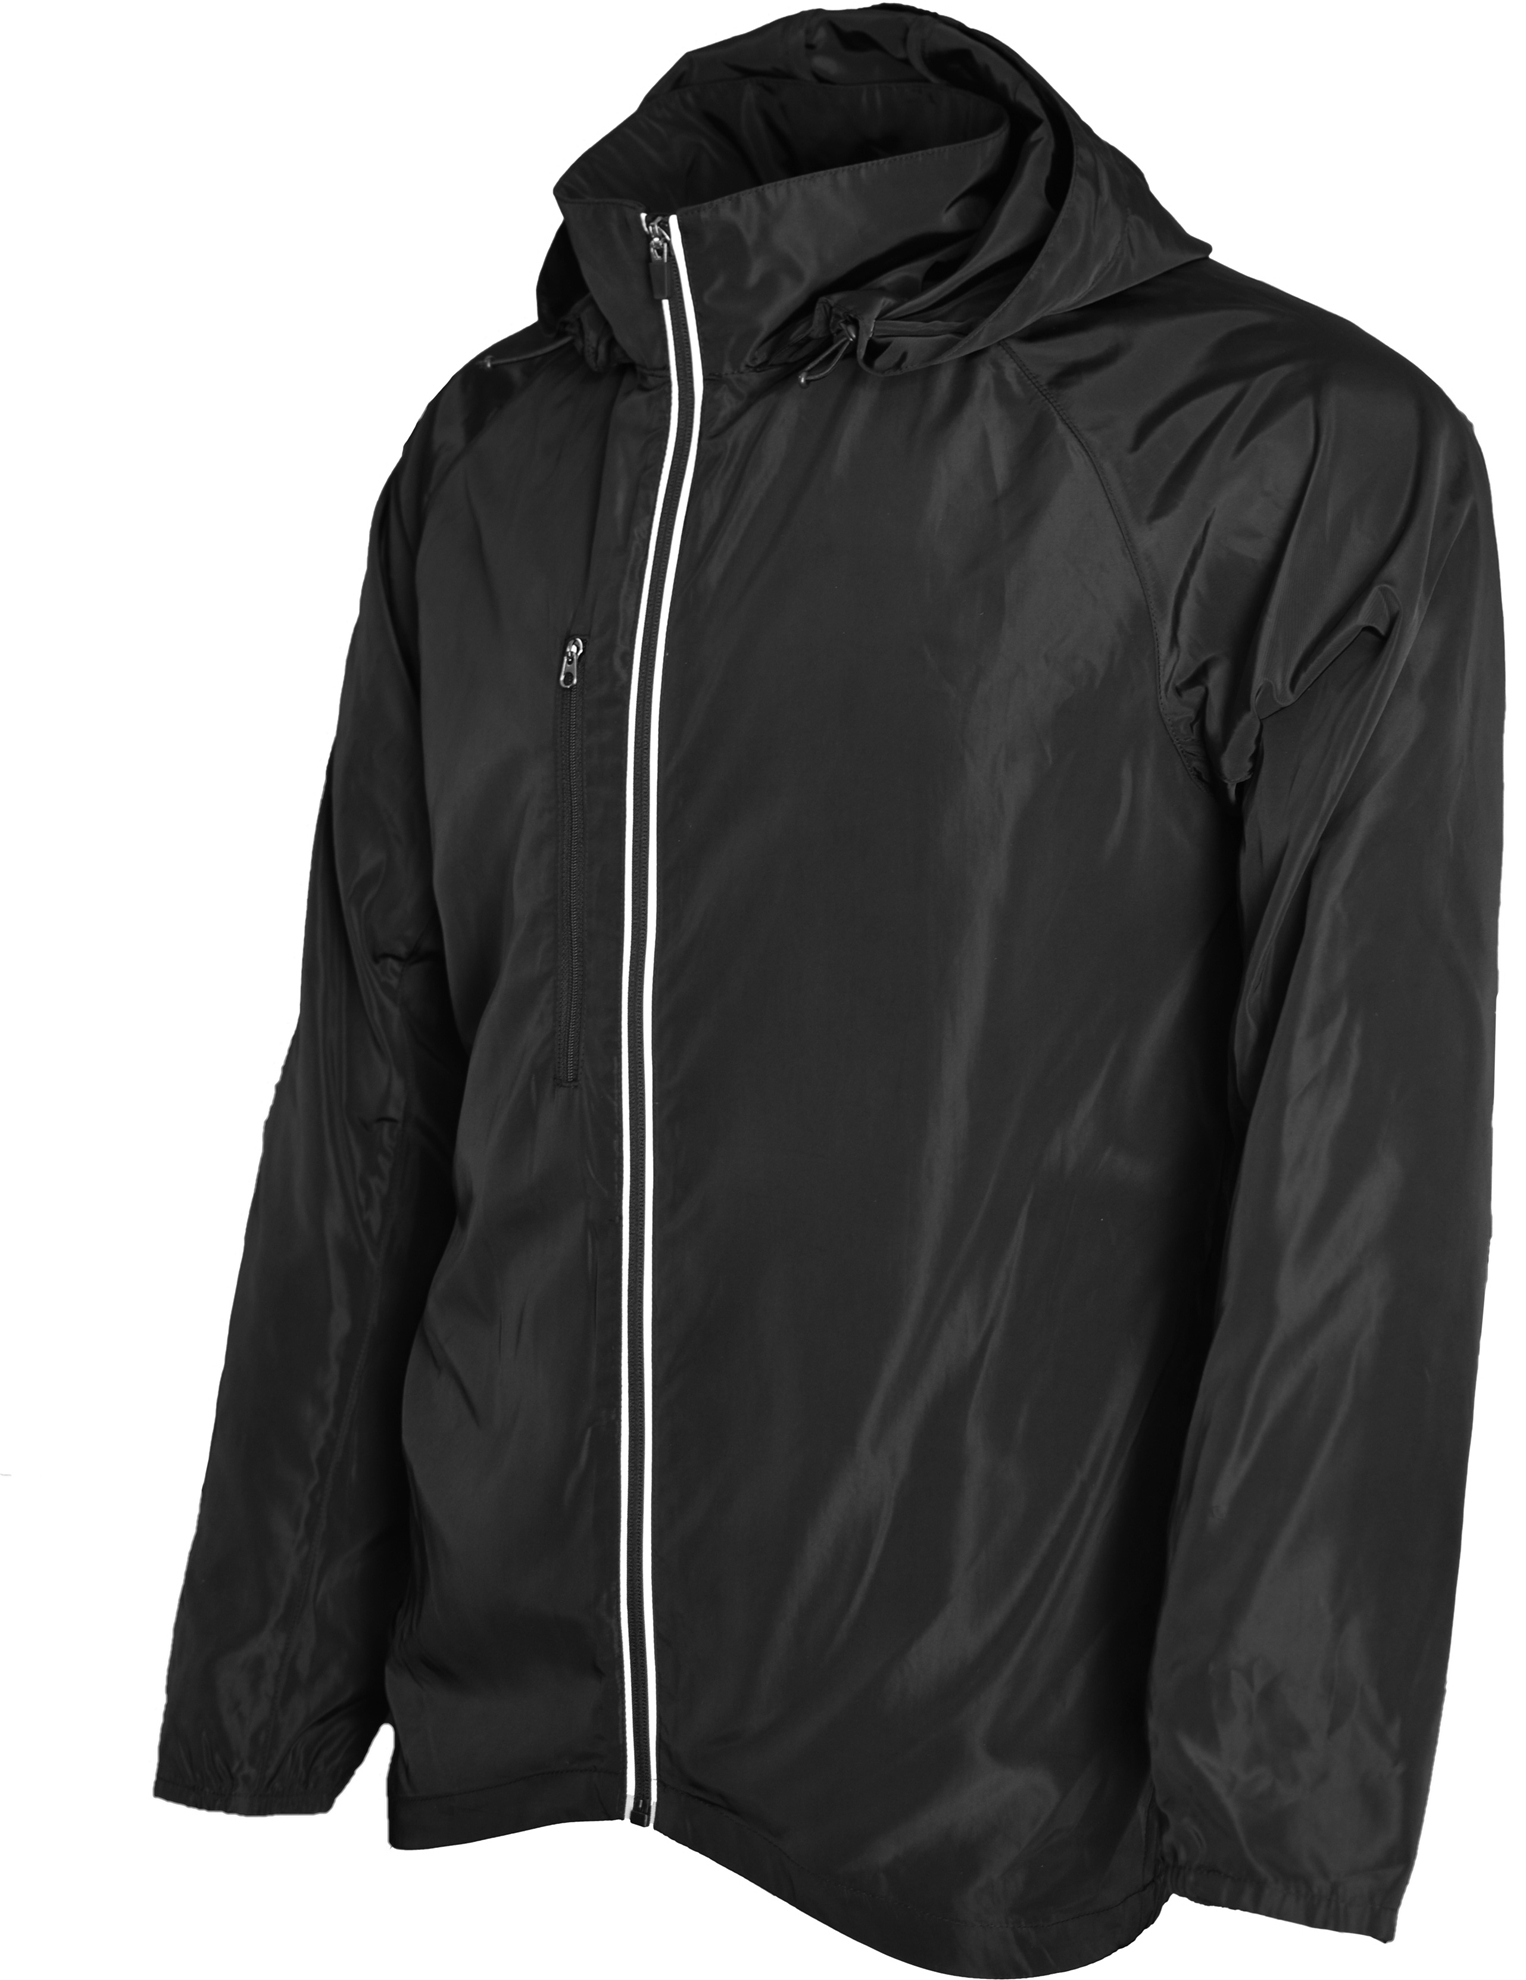 BAW Athletic Wear JP001 - Unisex Packable Jacket